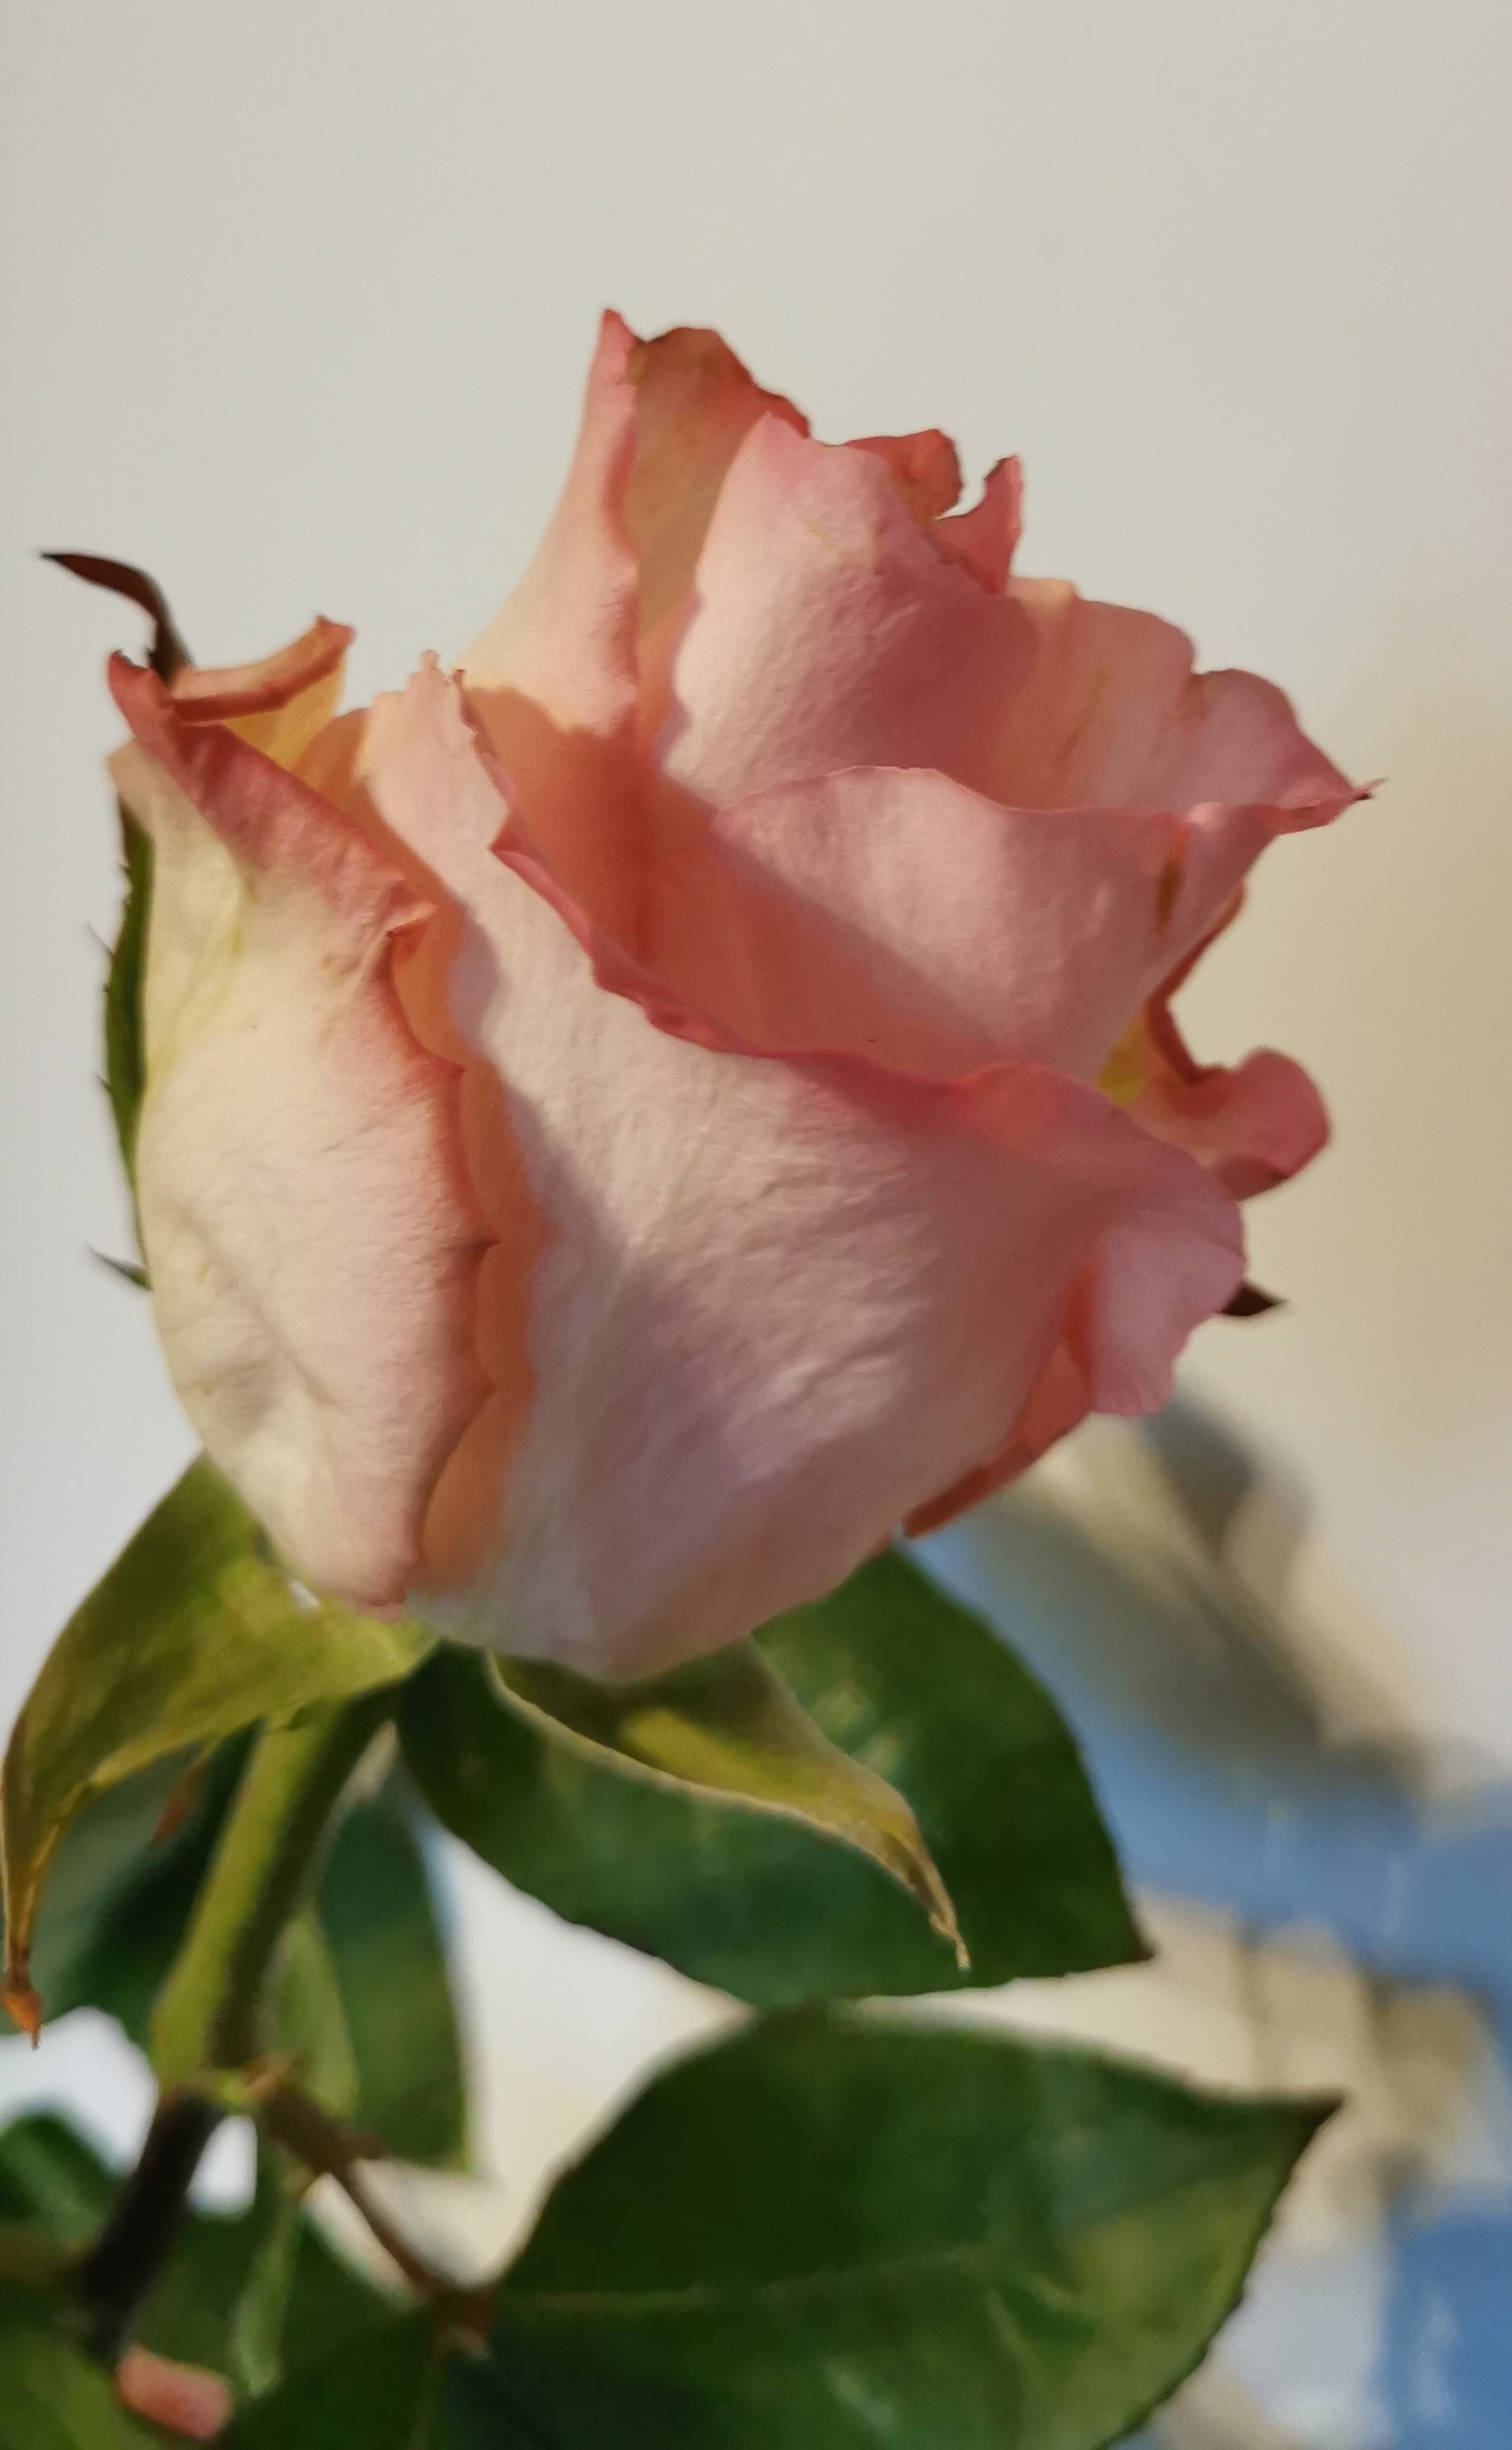 Rose Pink Mandala - Standard Rose - Roses - Flowers by category